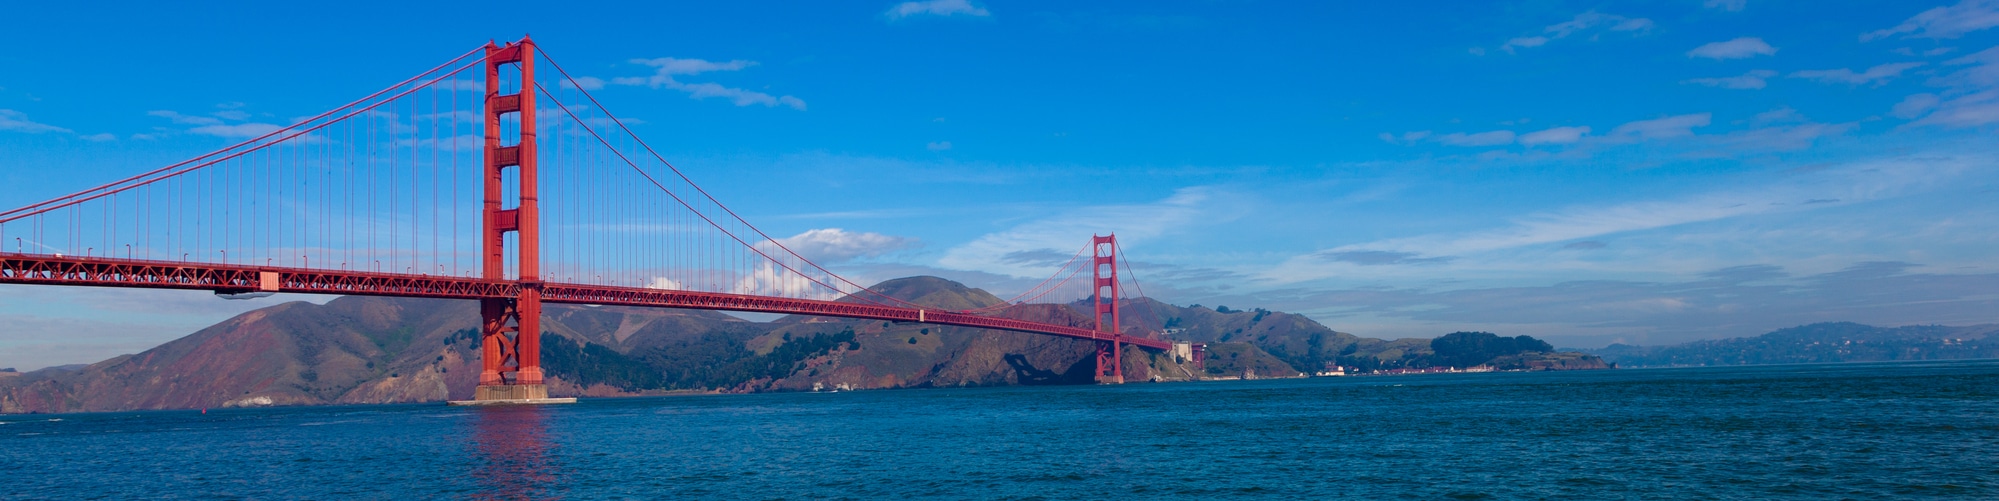 Golden Gate Bridge, San Francisco Bay